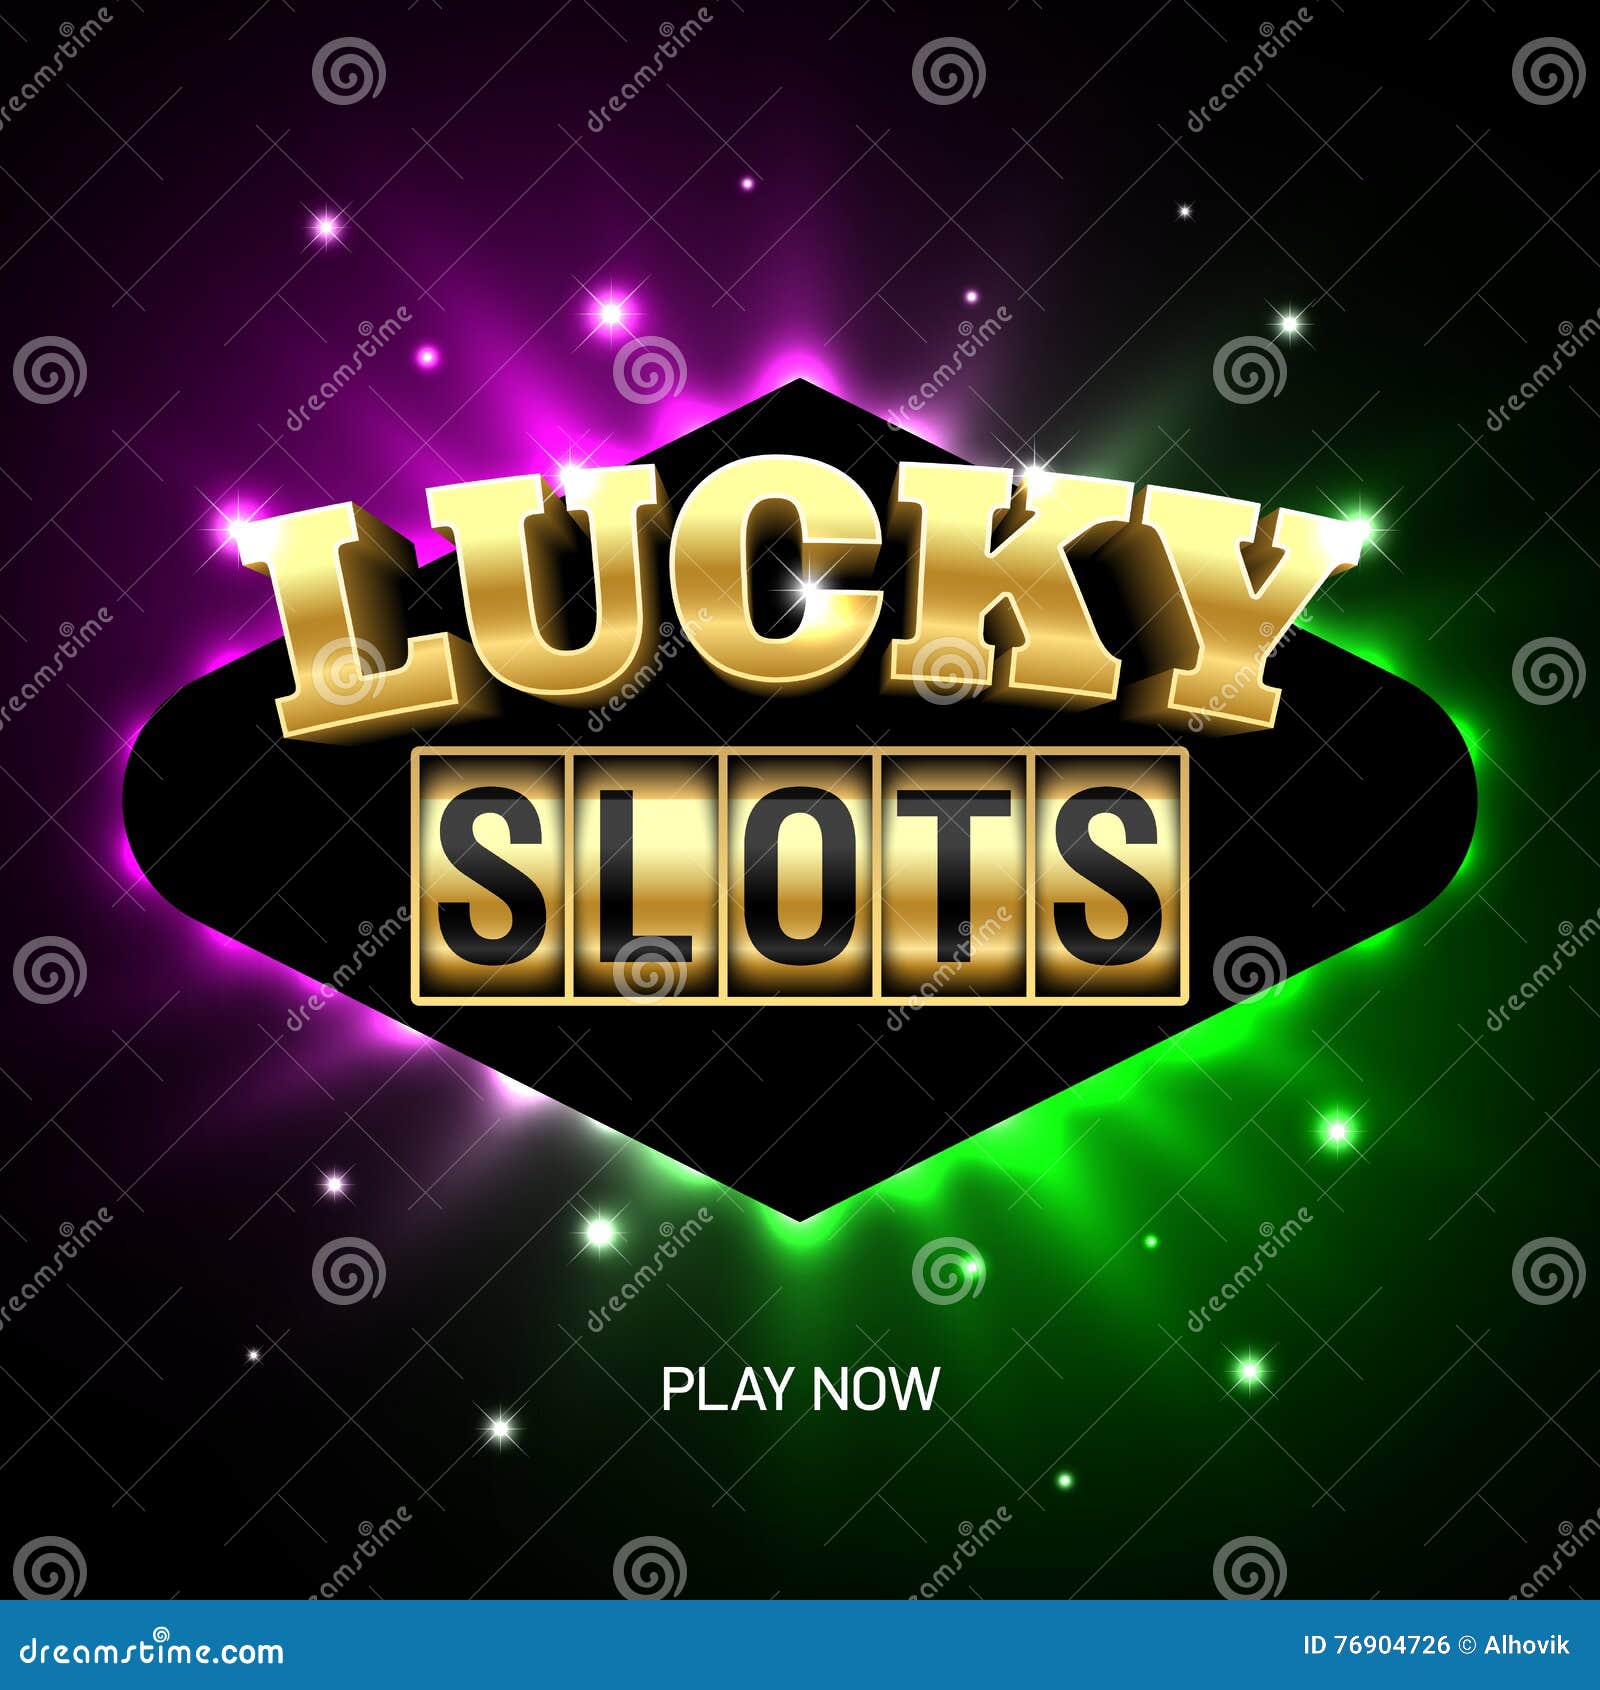 lucky slots casino banner